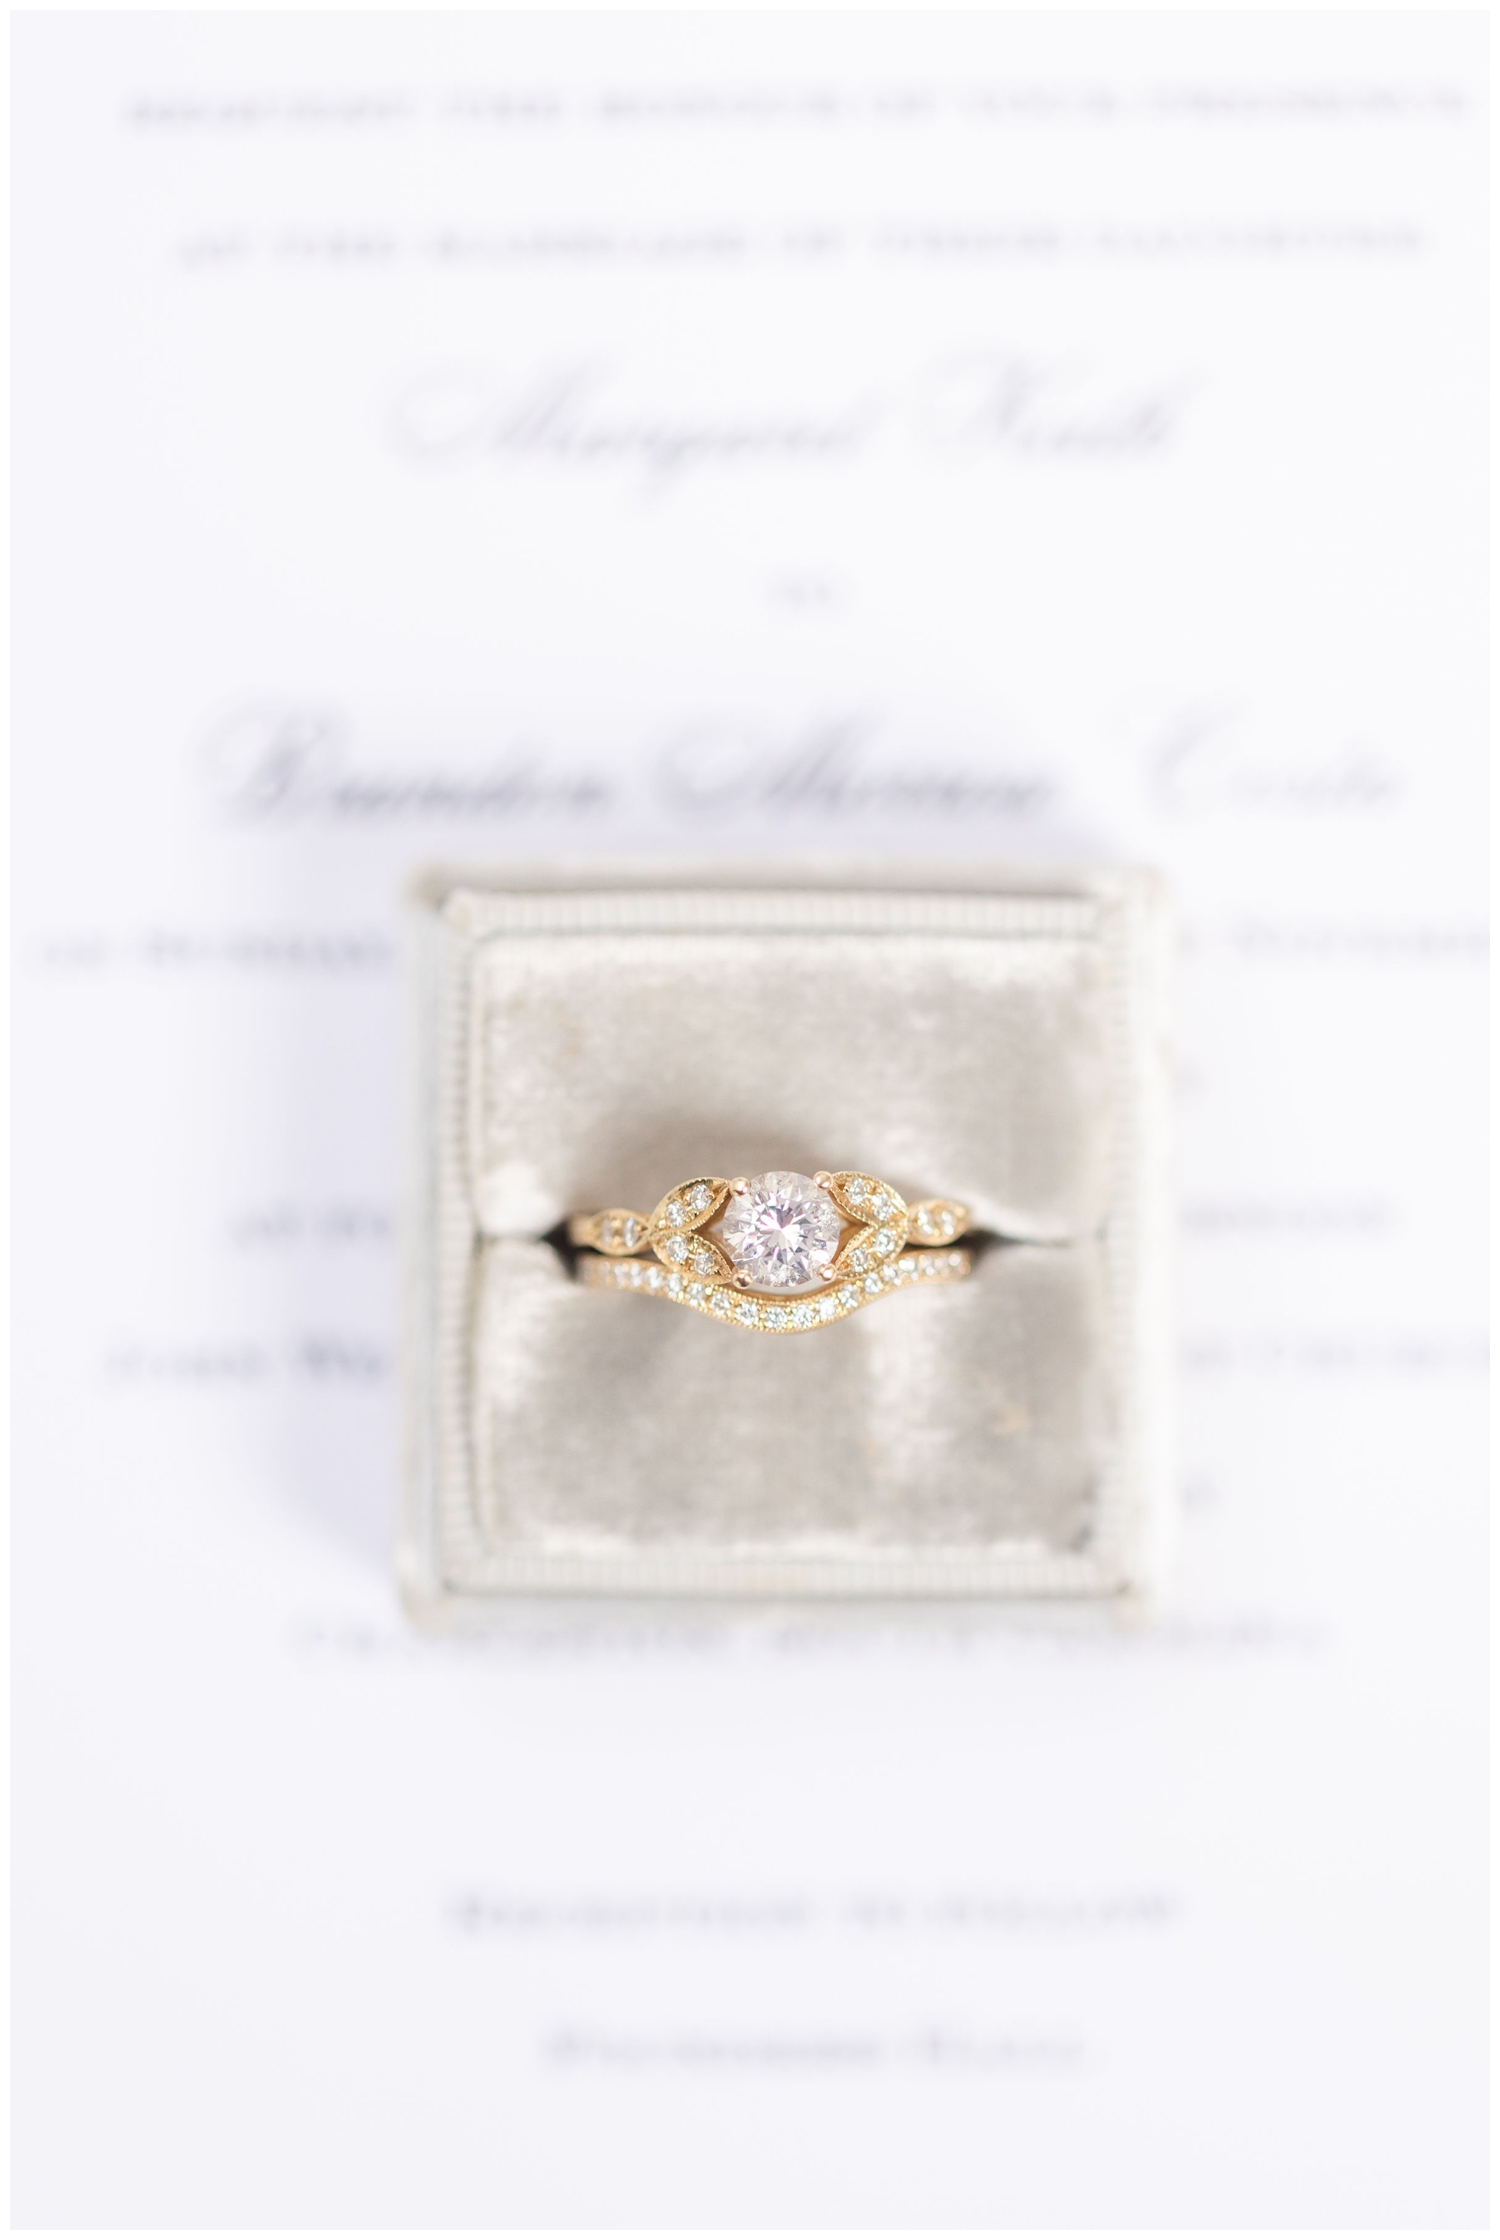 close up of diamond wedding ring sitting on all white invitation